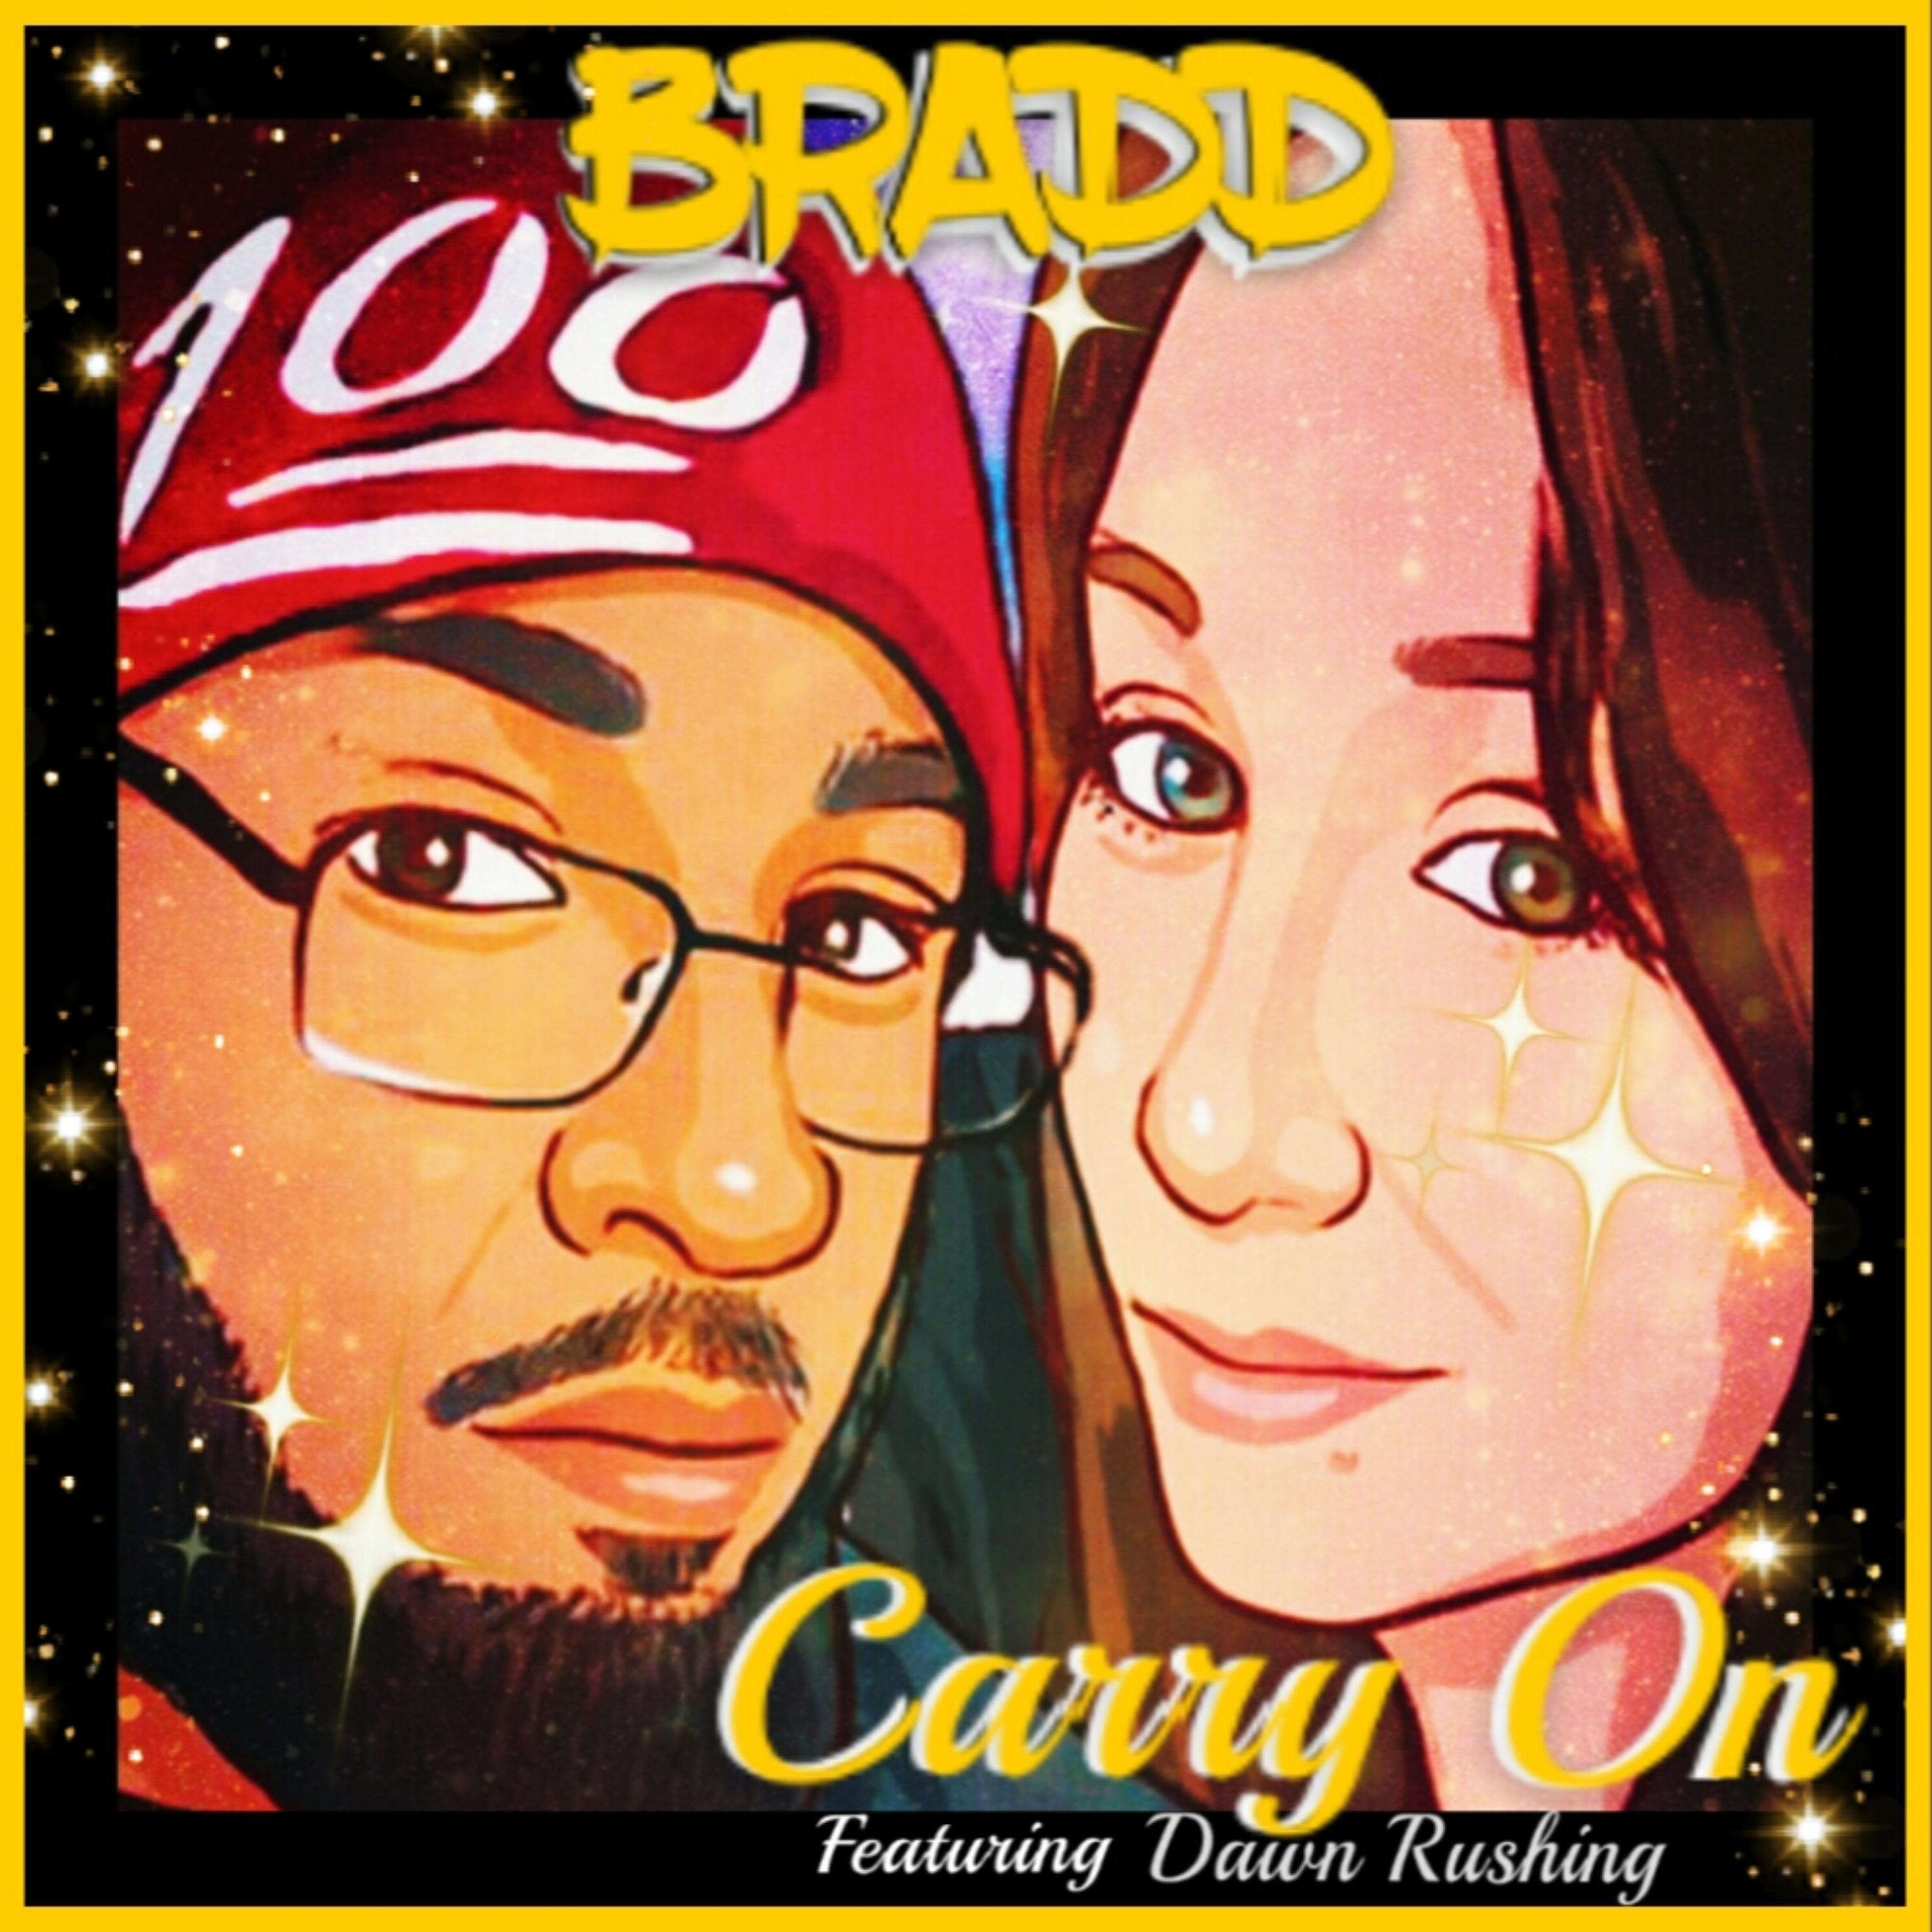 Bradd - Carry On (feat. Dawn Rushing)